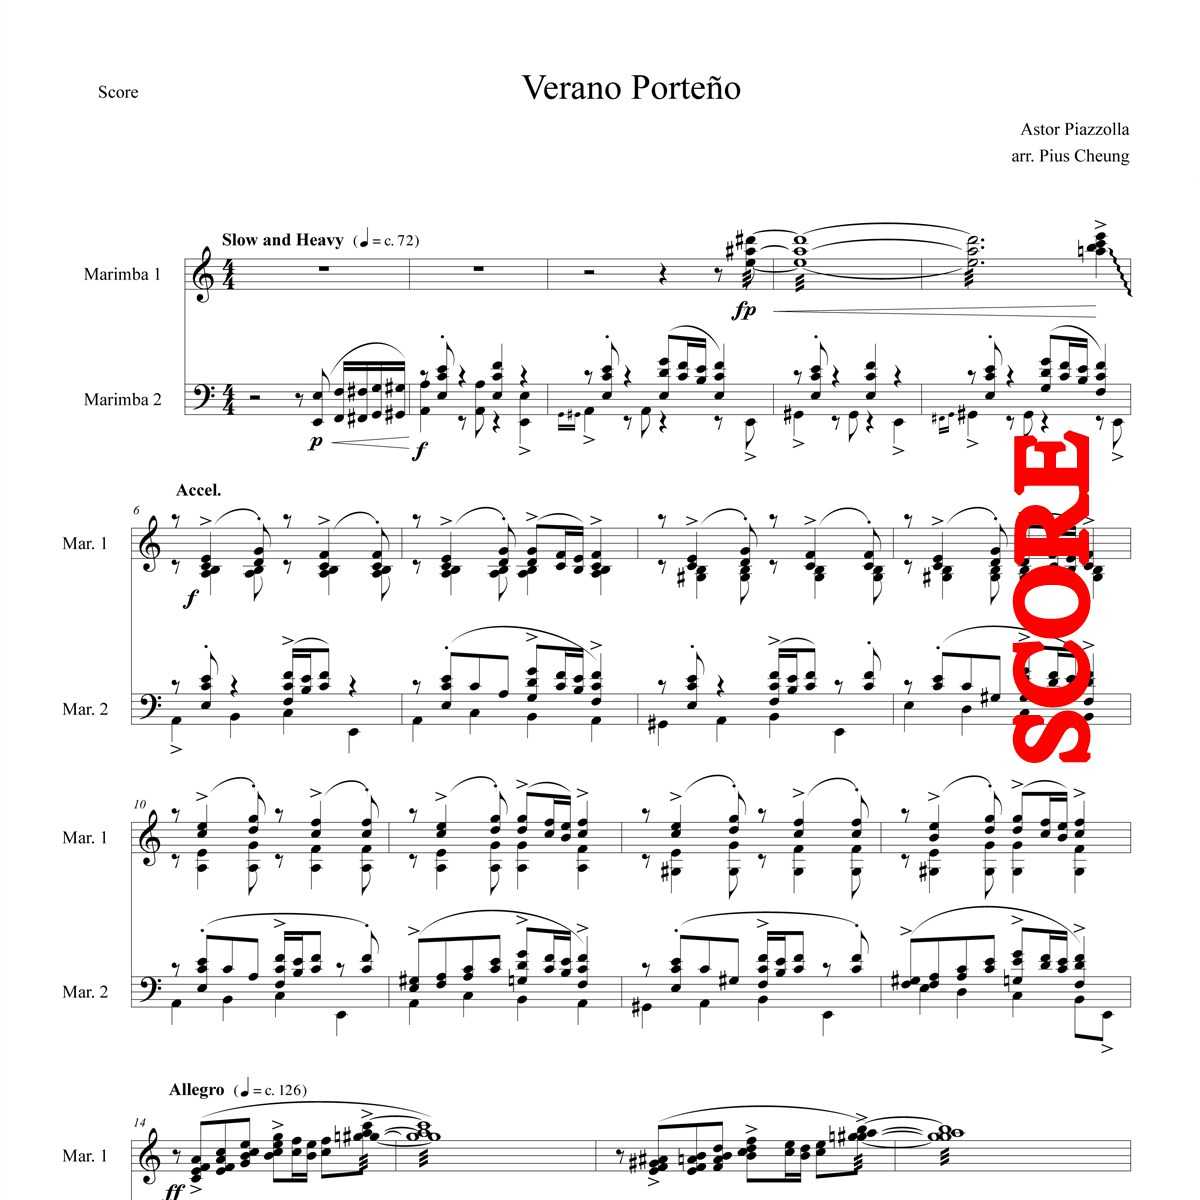 Verano Porteno for marimba duo by Pius Cheung